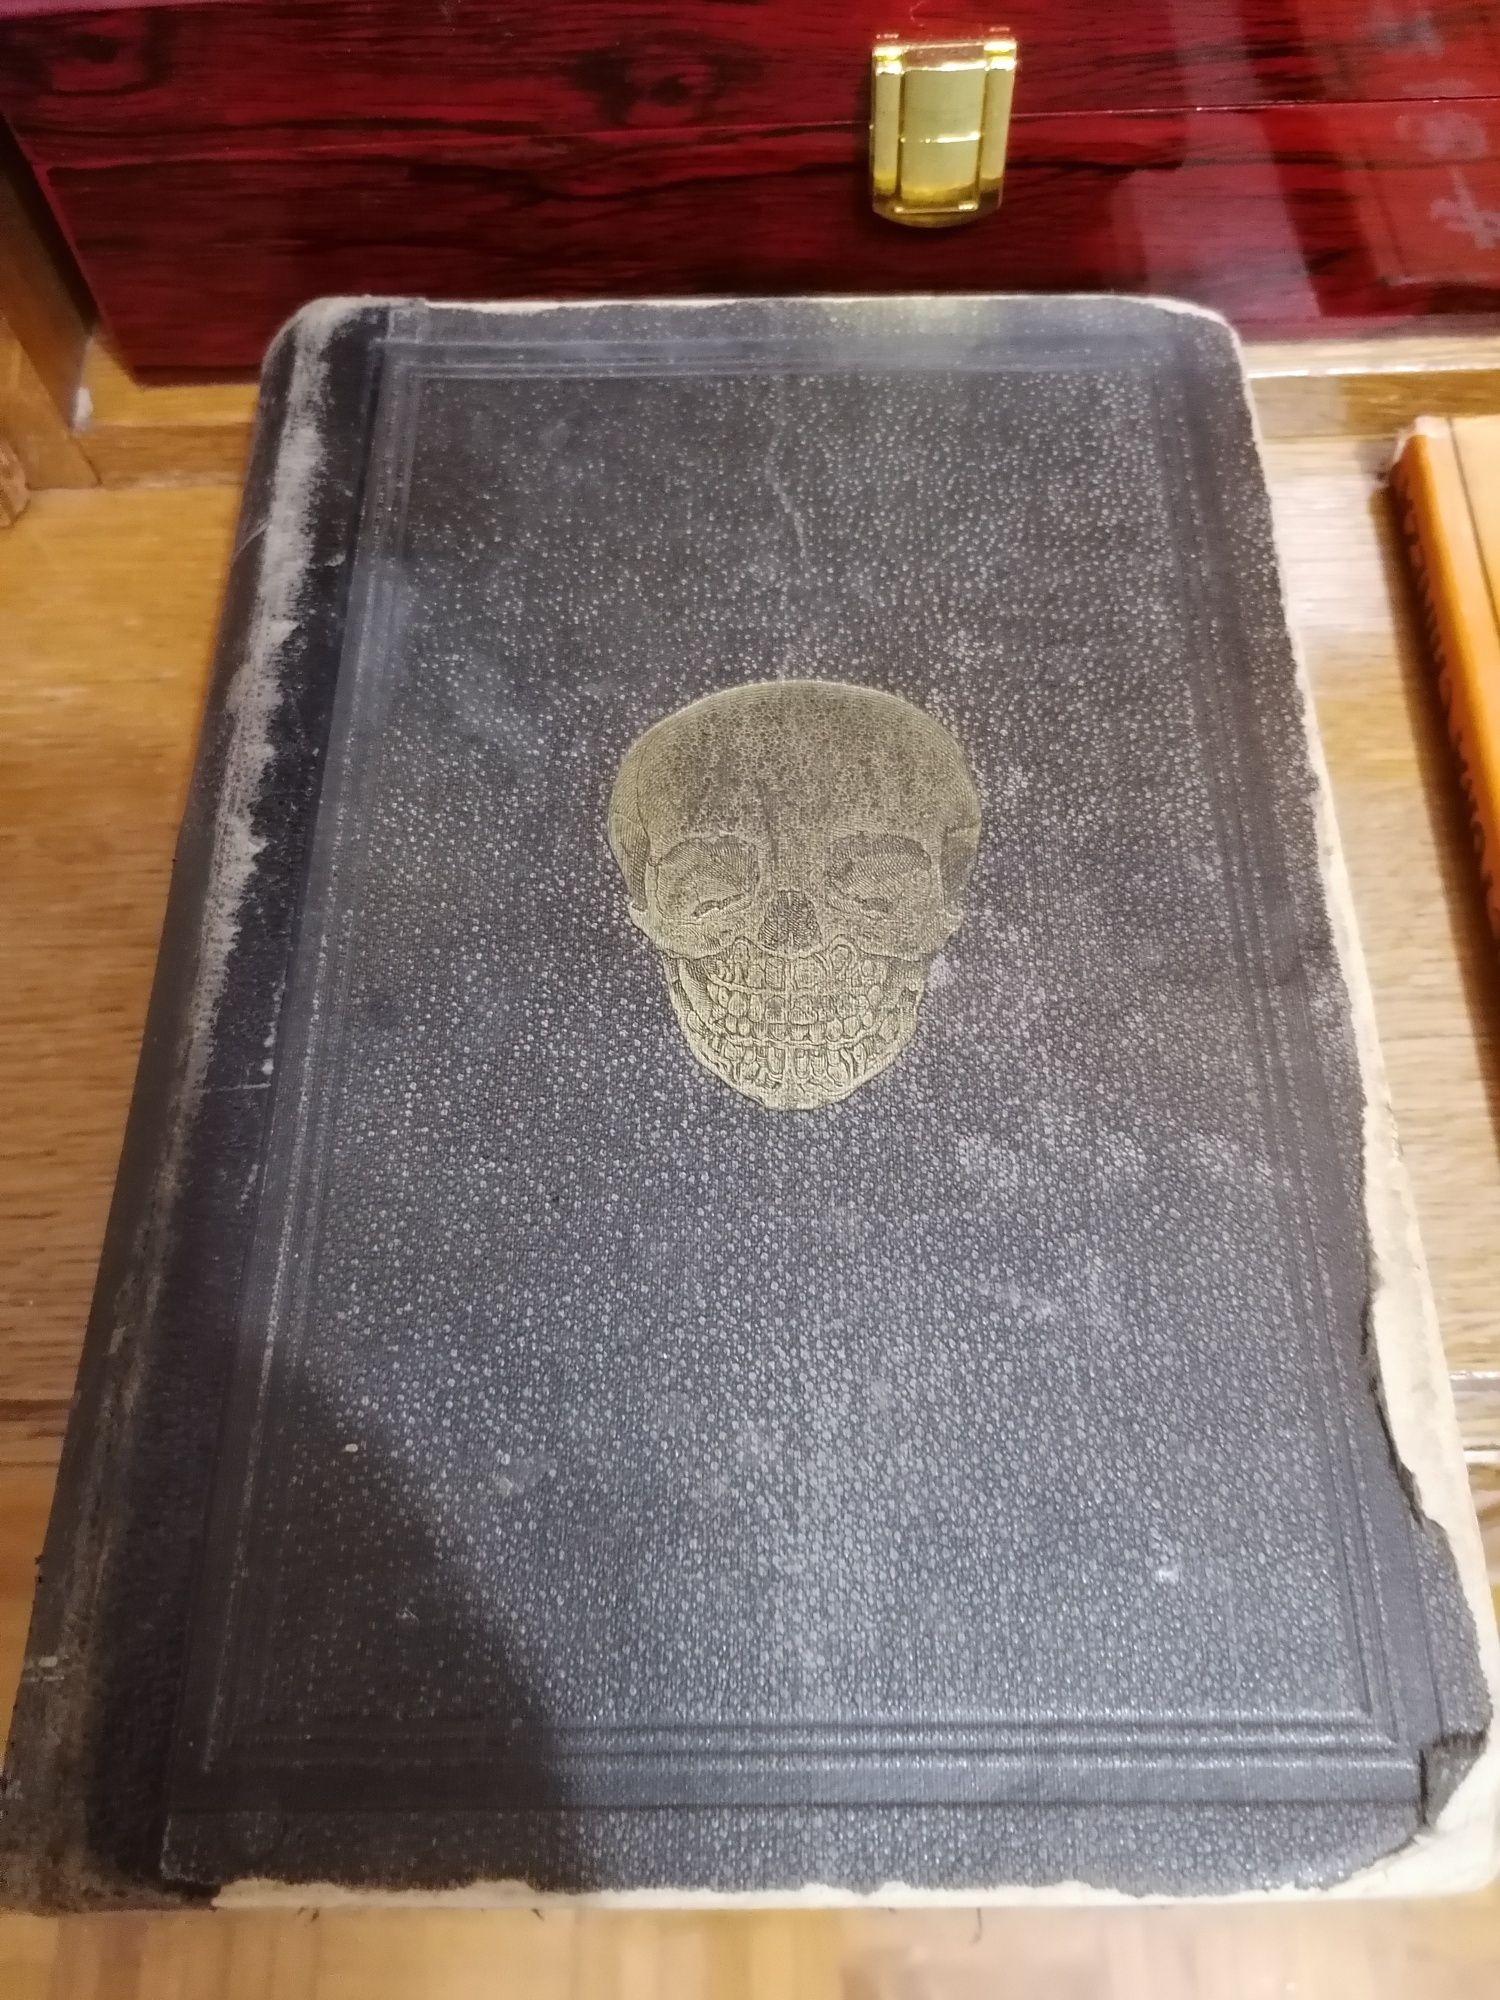 Manual de anatomie Carl Heitzmann 2 octombrie 1836 – 6 decembrie 1896